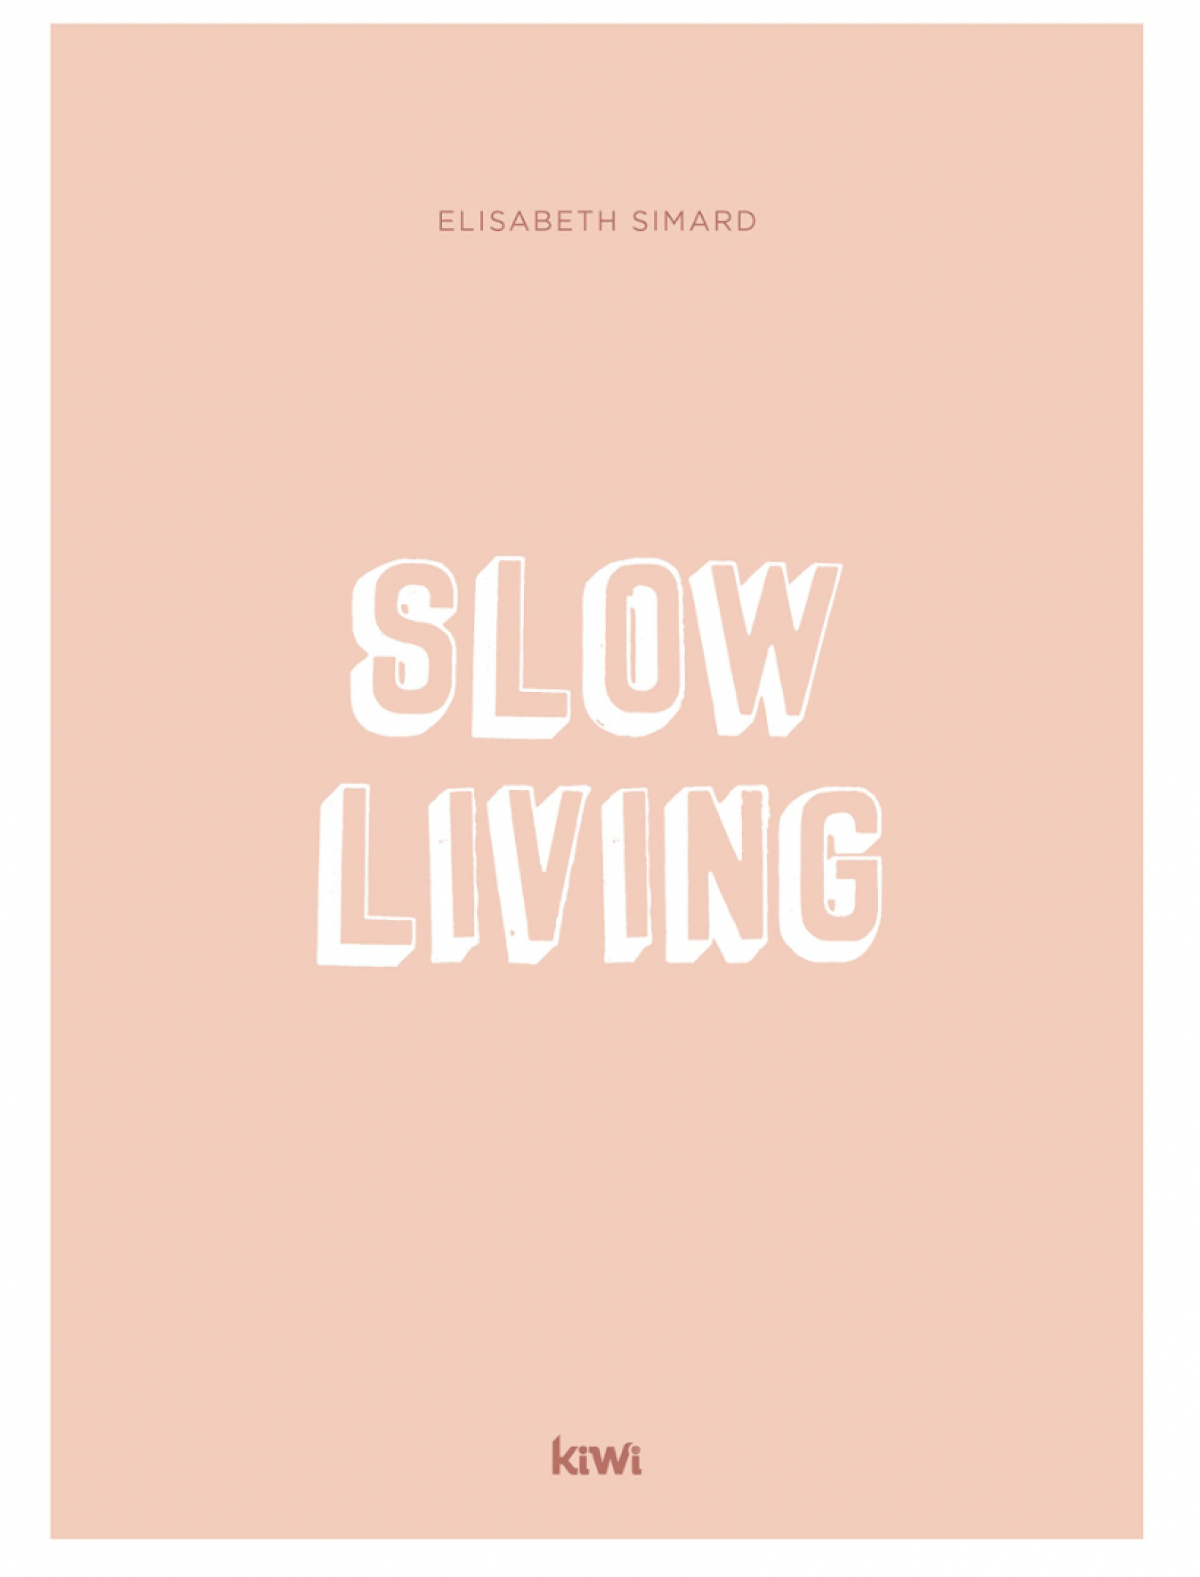 Slow living